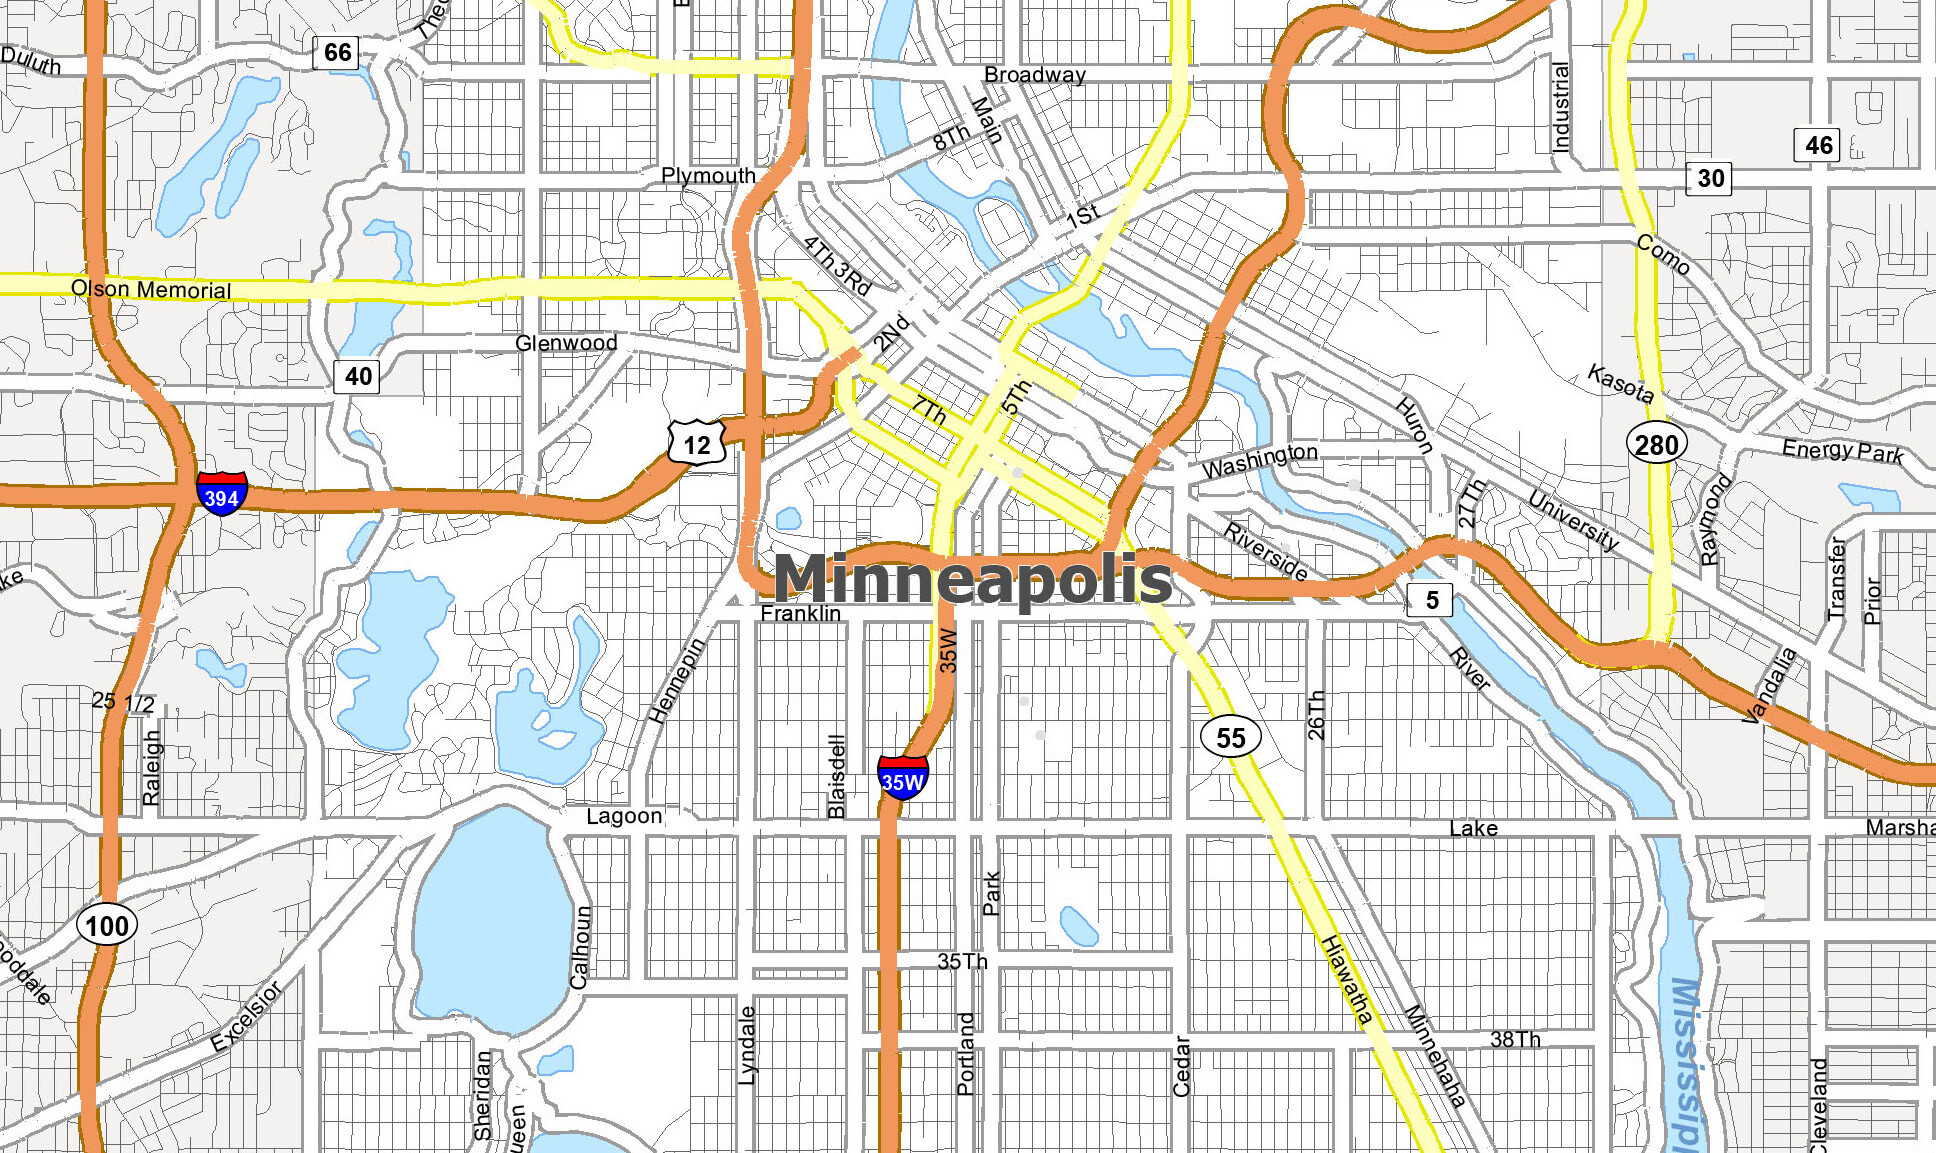 Minneapolis Transit Network Map